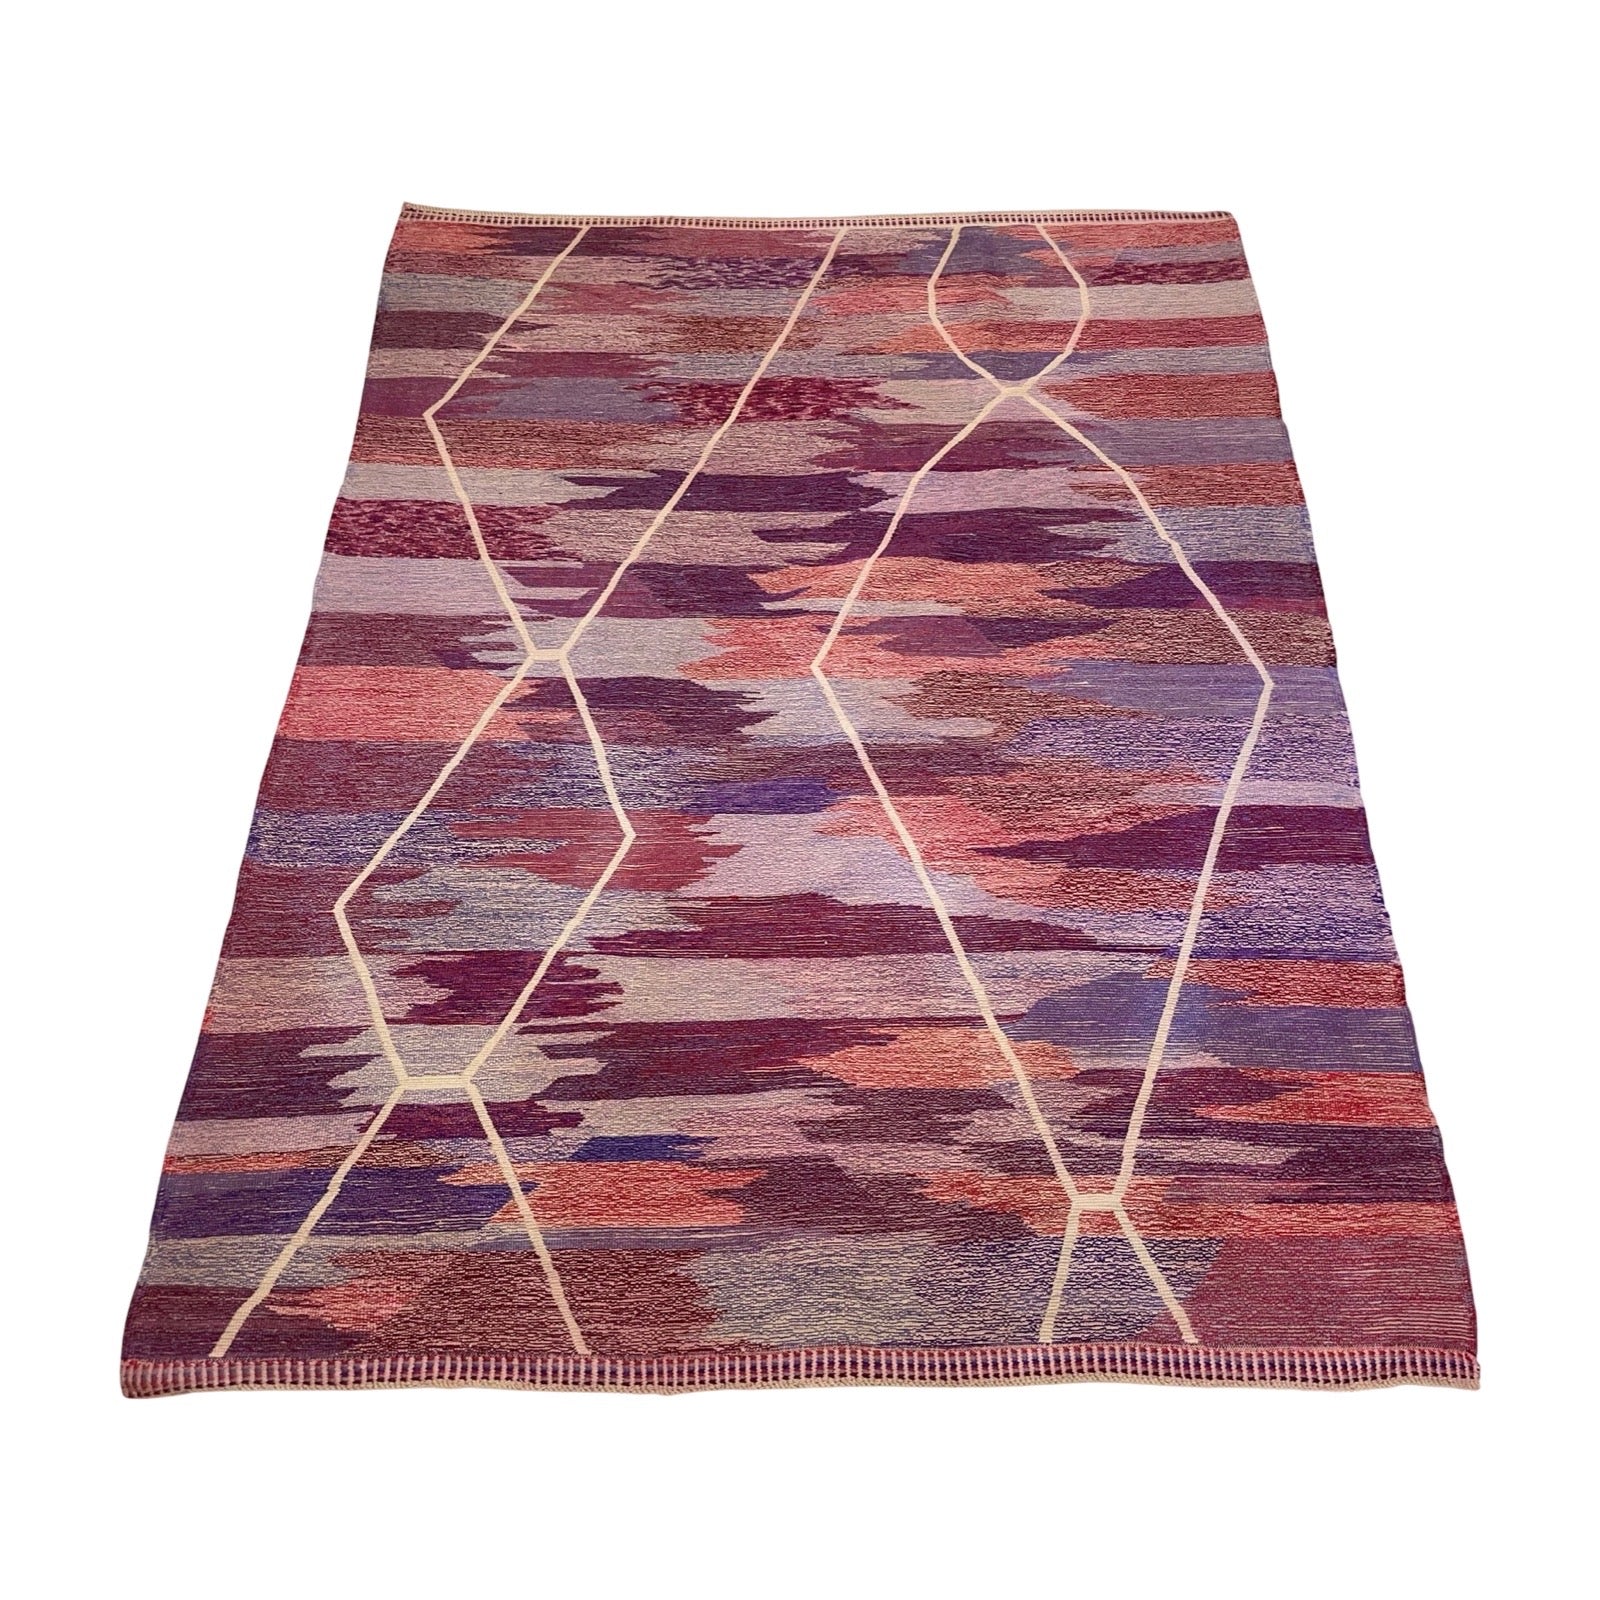 Geometric Moroccan Beni Mrirt rug in red, purple, and pink - Kantara | Moroccan Rugs